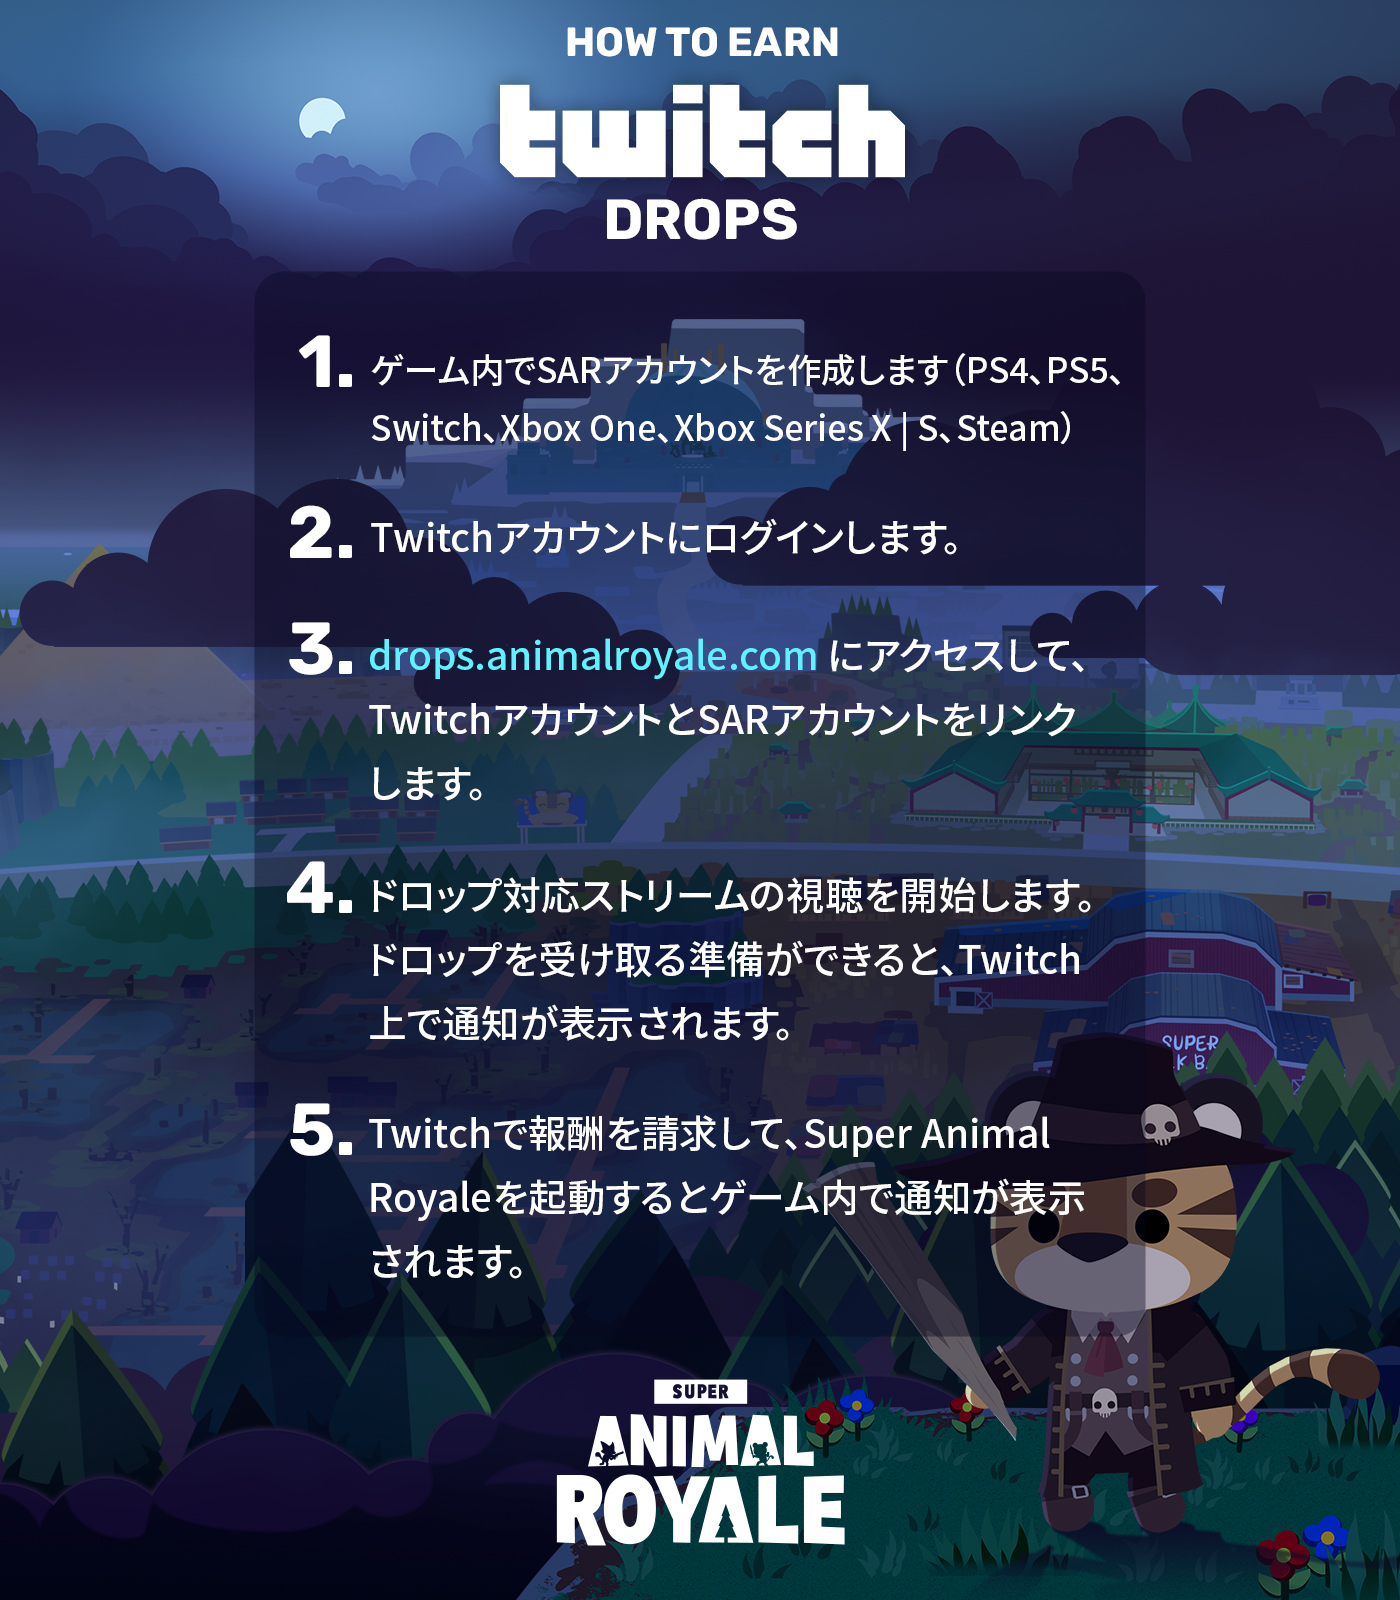 Super Animal Royale Twitch ドロップ ヴァンパイア ハンターセット Steamニュース